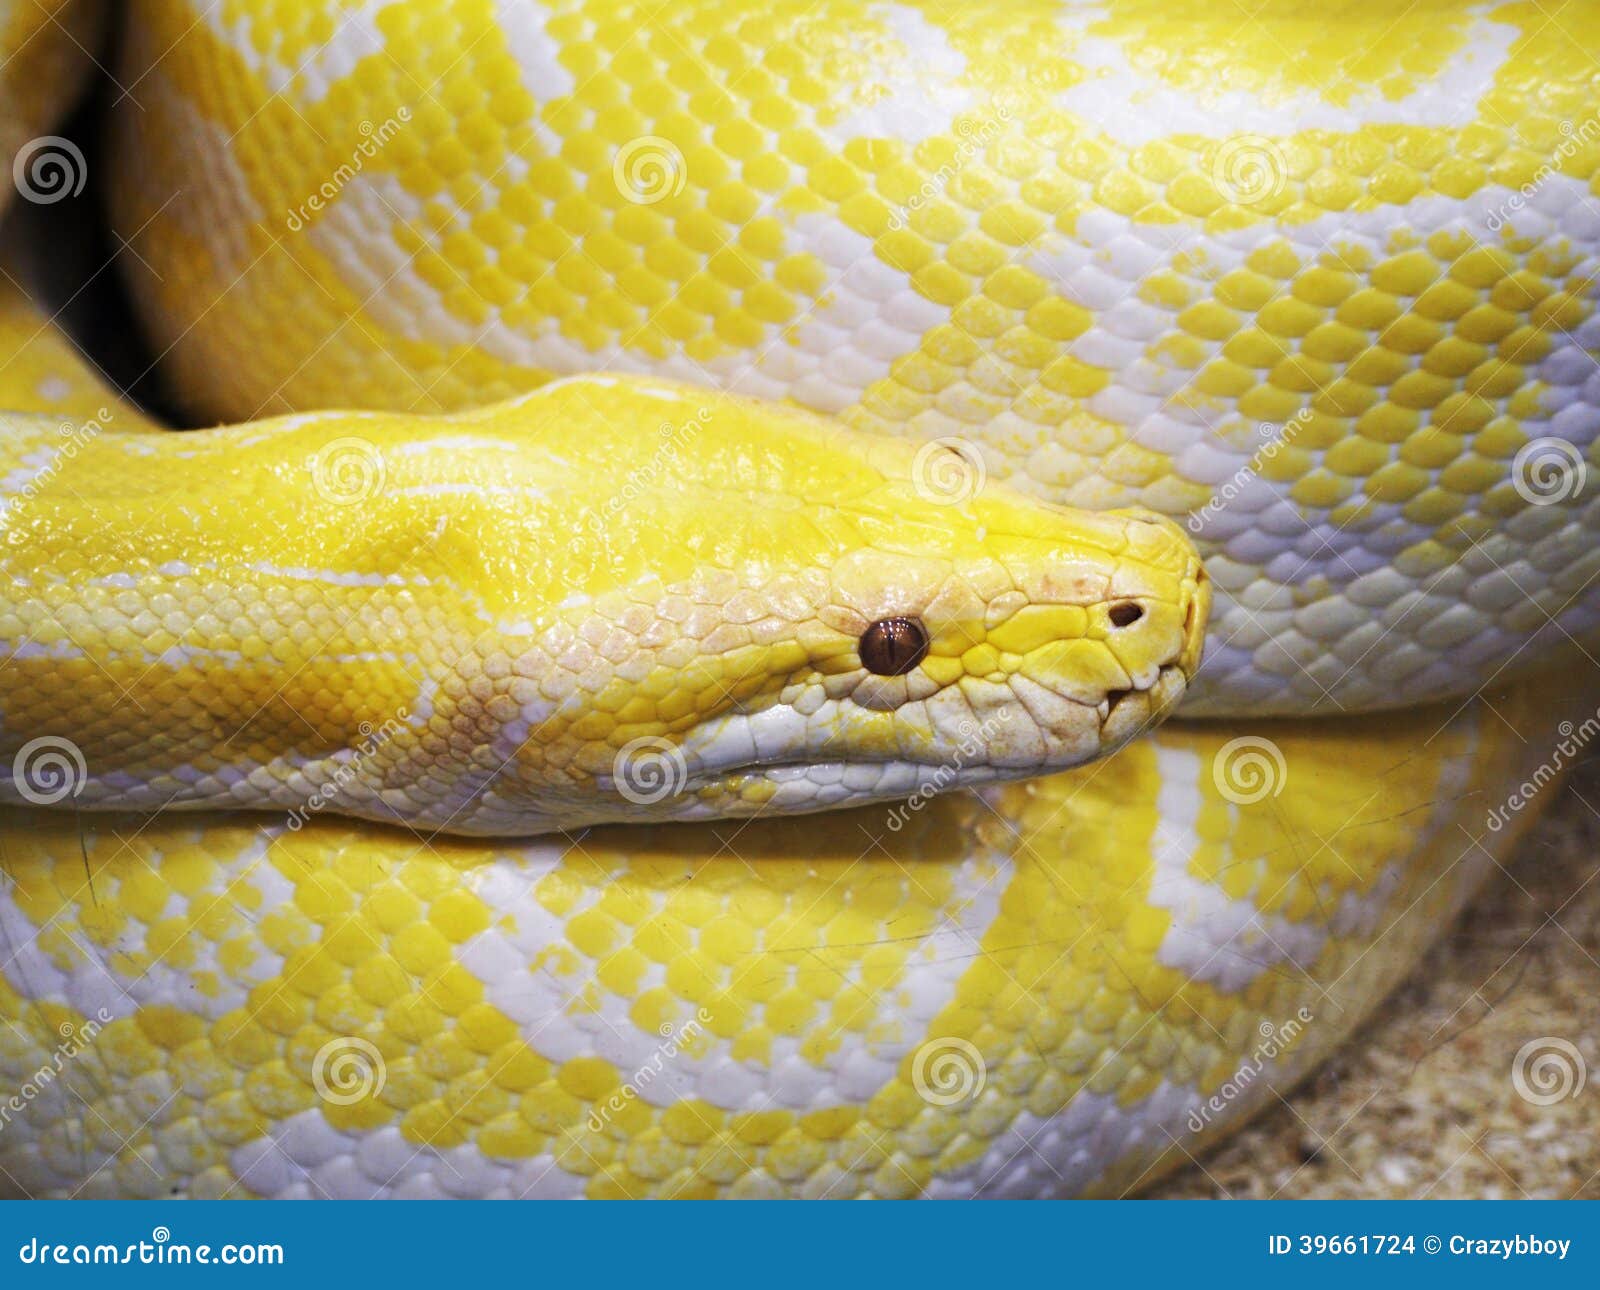 Yellow Snake Photo 39661724 